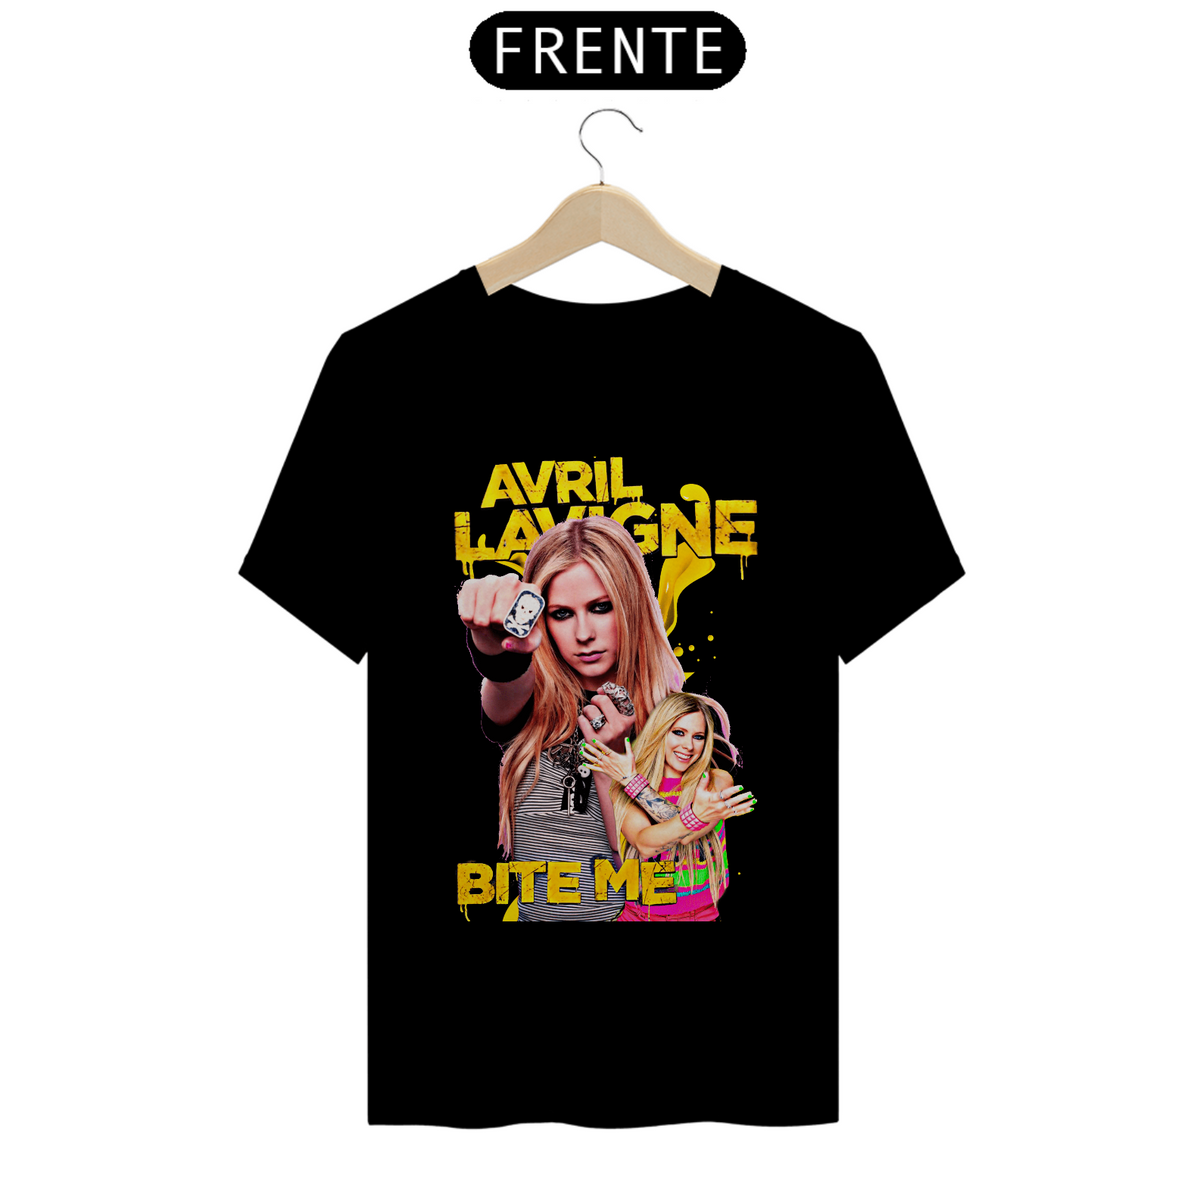 Nome do produto: Camiseta Quality - Avril Lavigne, Bite me  